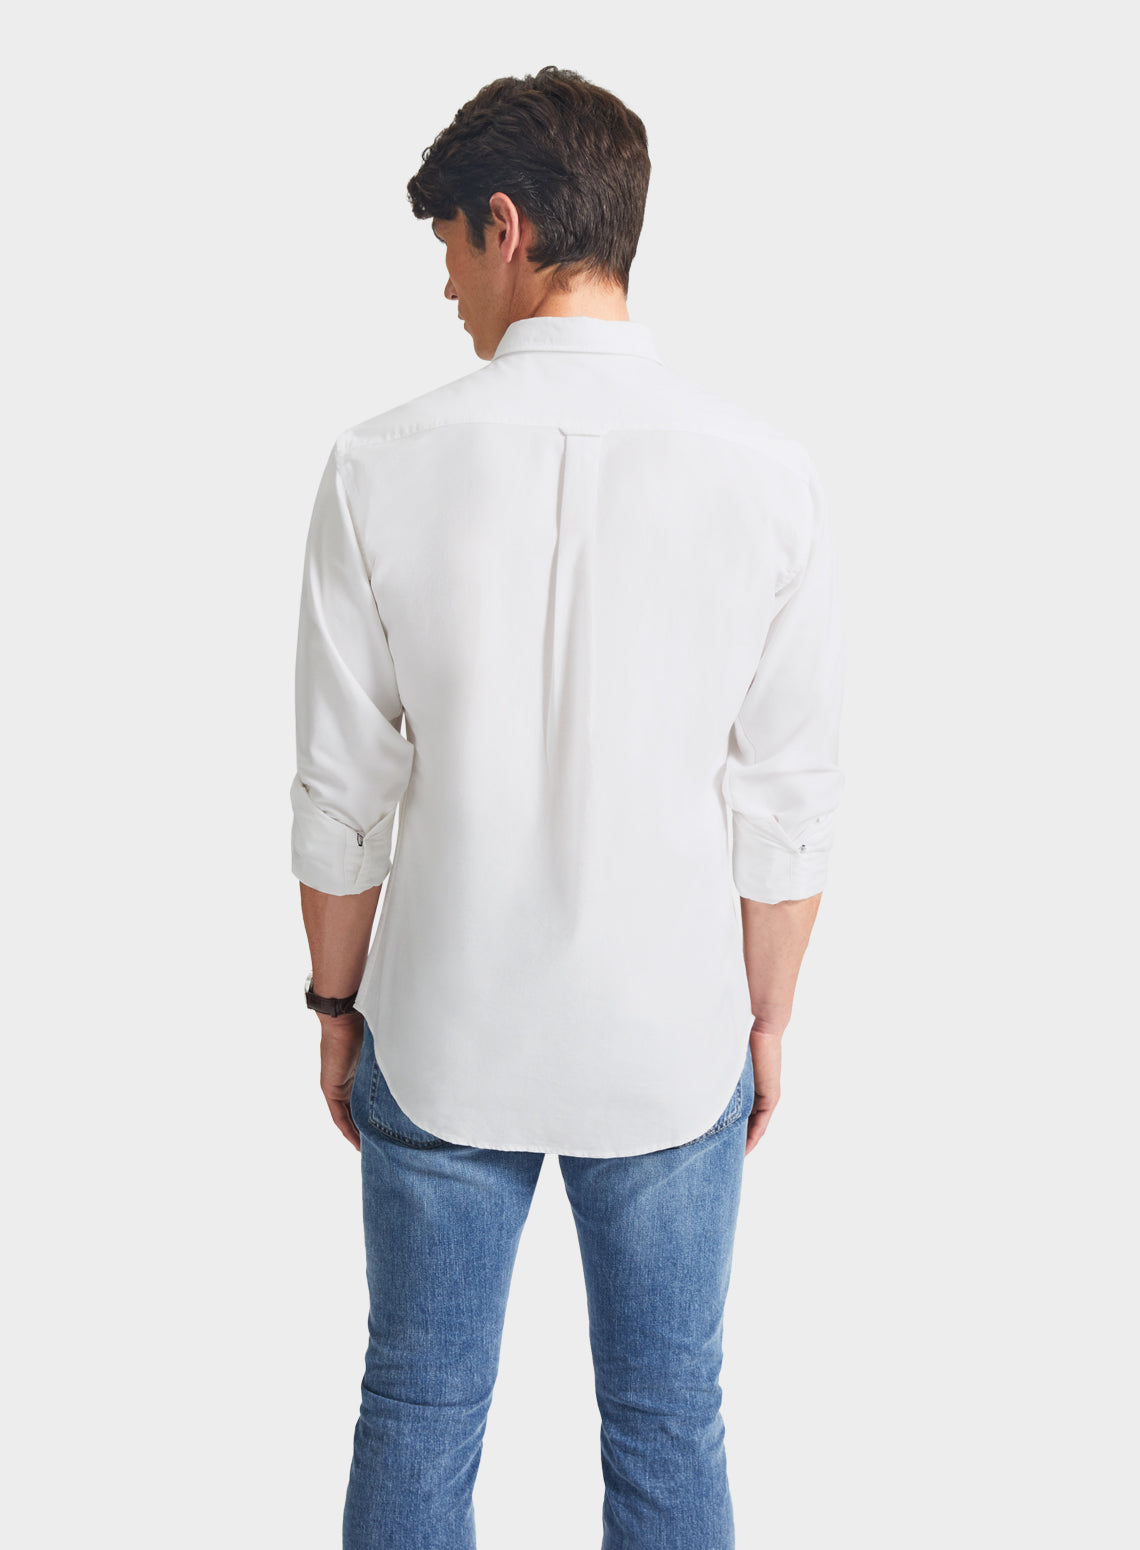 Classic Oxford Shirt - White